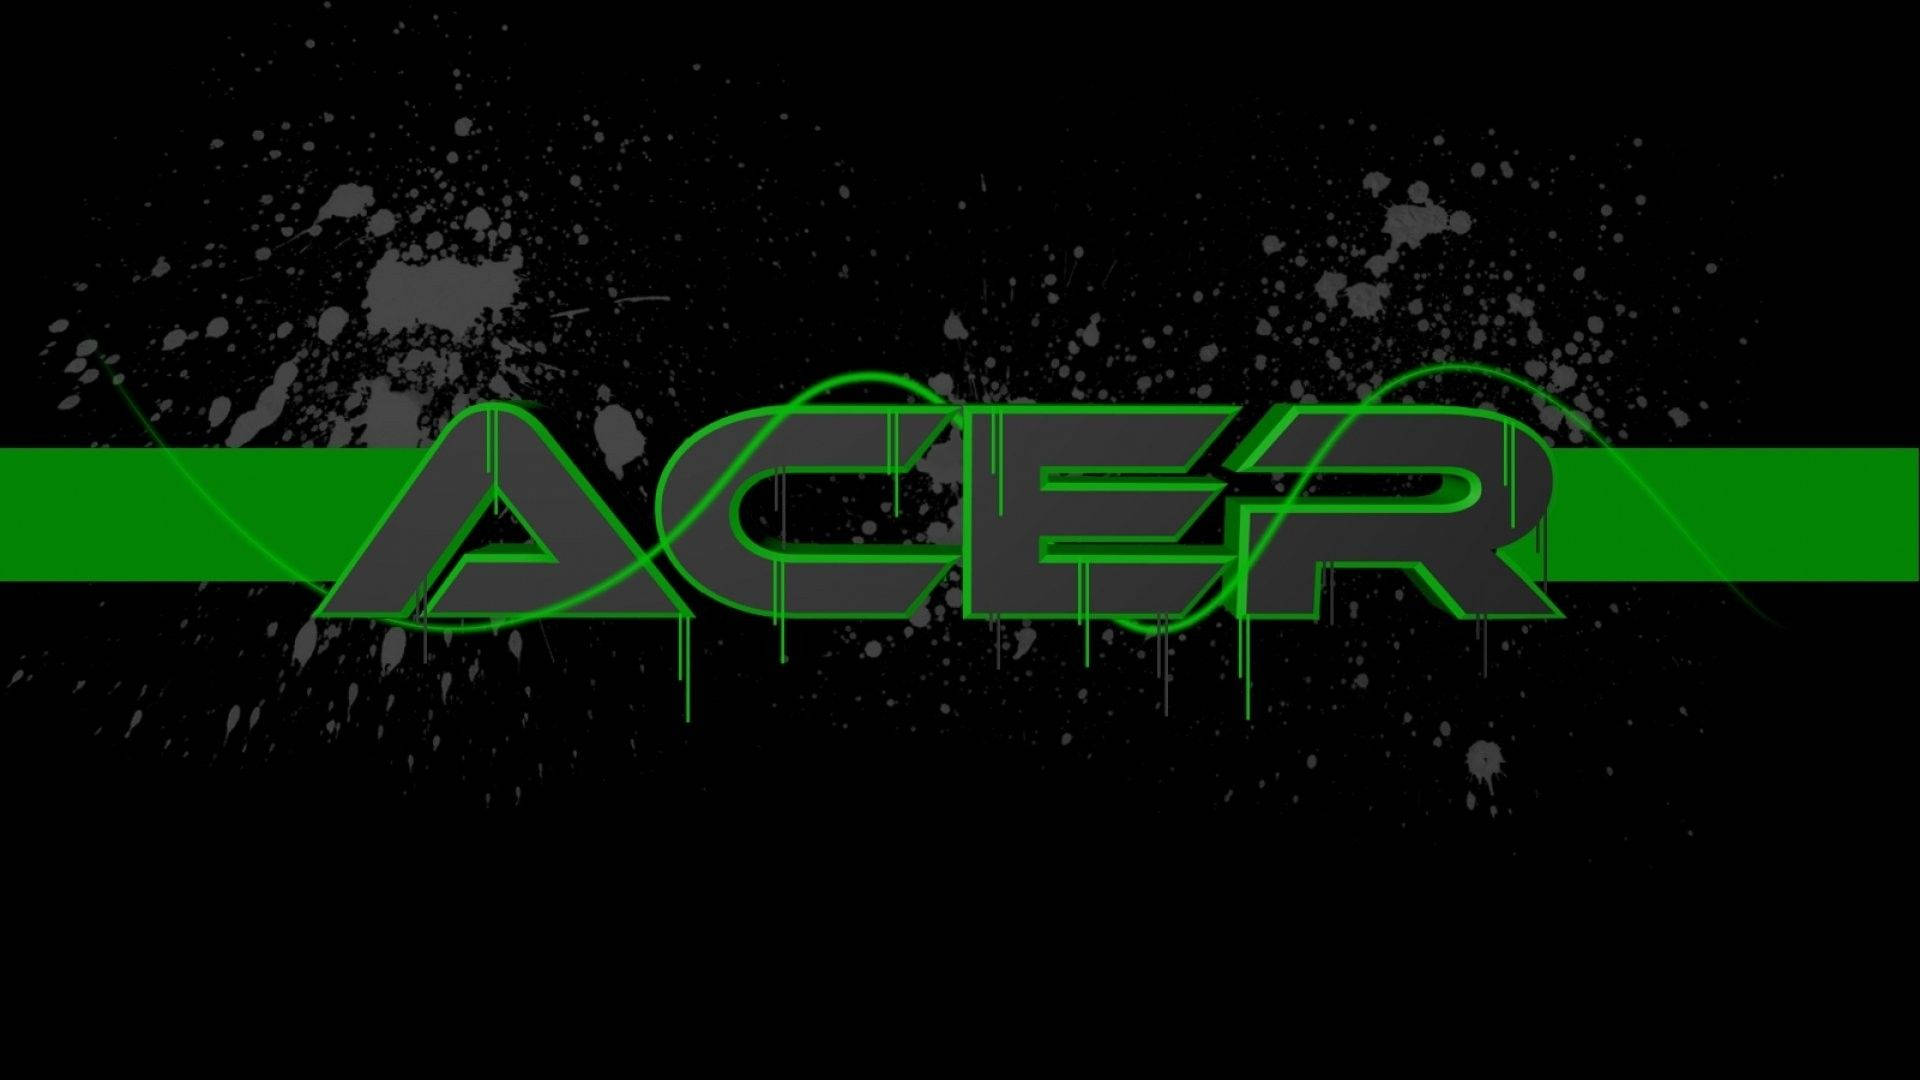 Captivating Acer Logo Paint Splatters Background